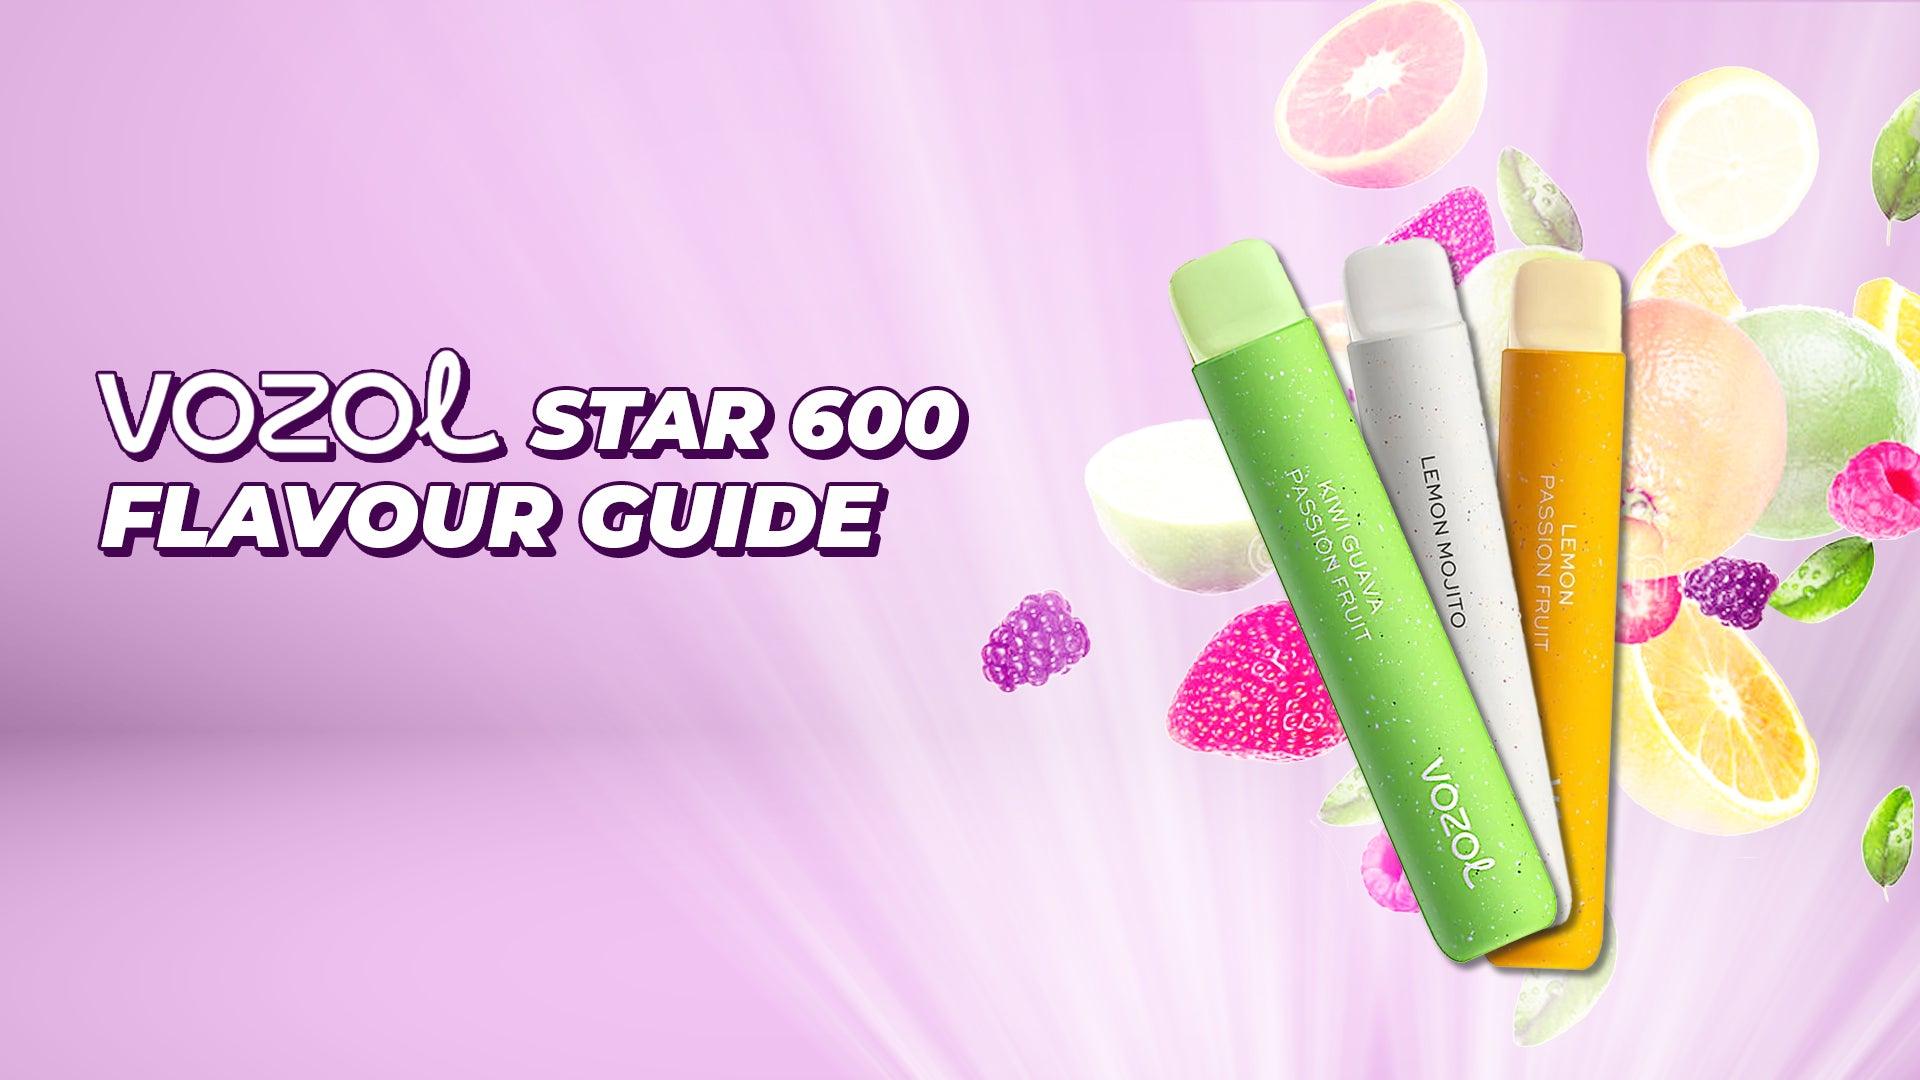 Vozol Star 600 Flavour Guide - Brand:Vozol, Category:Vape Kits, Sub Category:Disposables